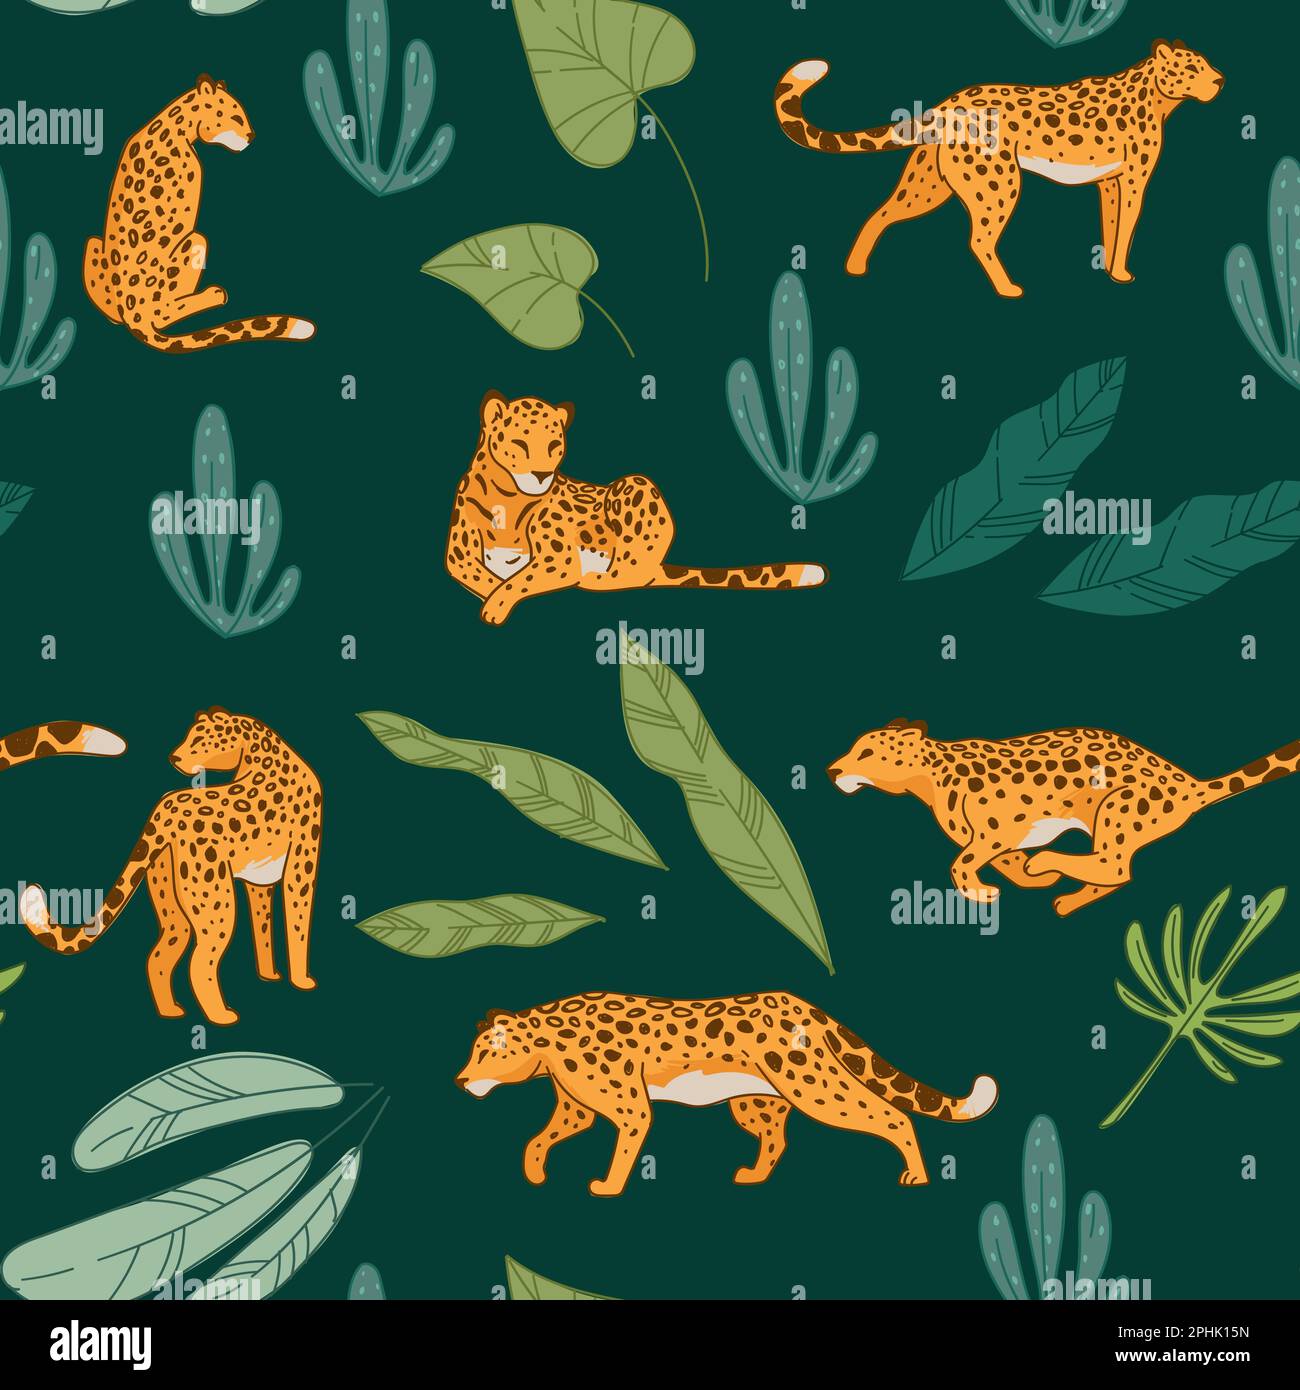 Cheetah habitat Stock Vector Images - Alamy